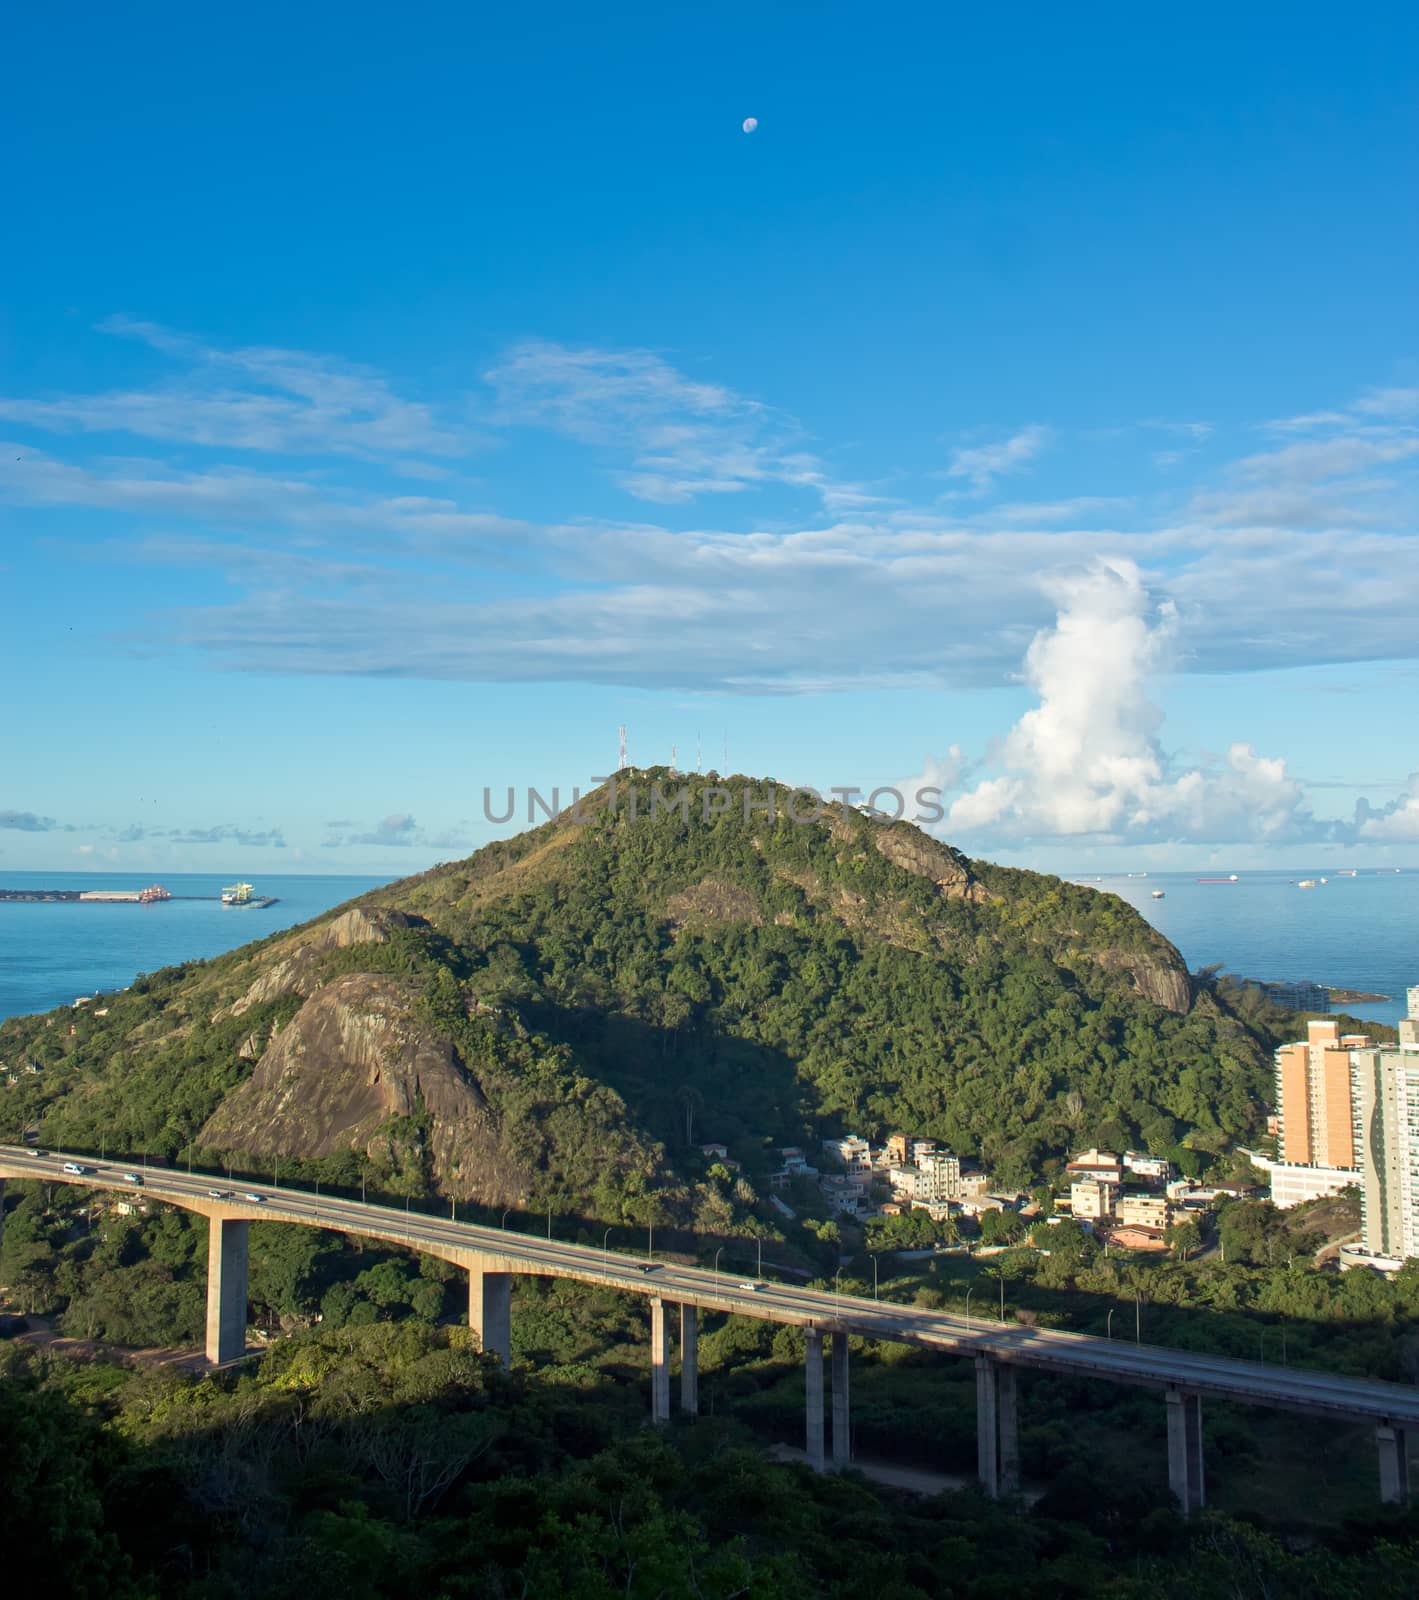 View of third bridge and Moreno hill